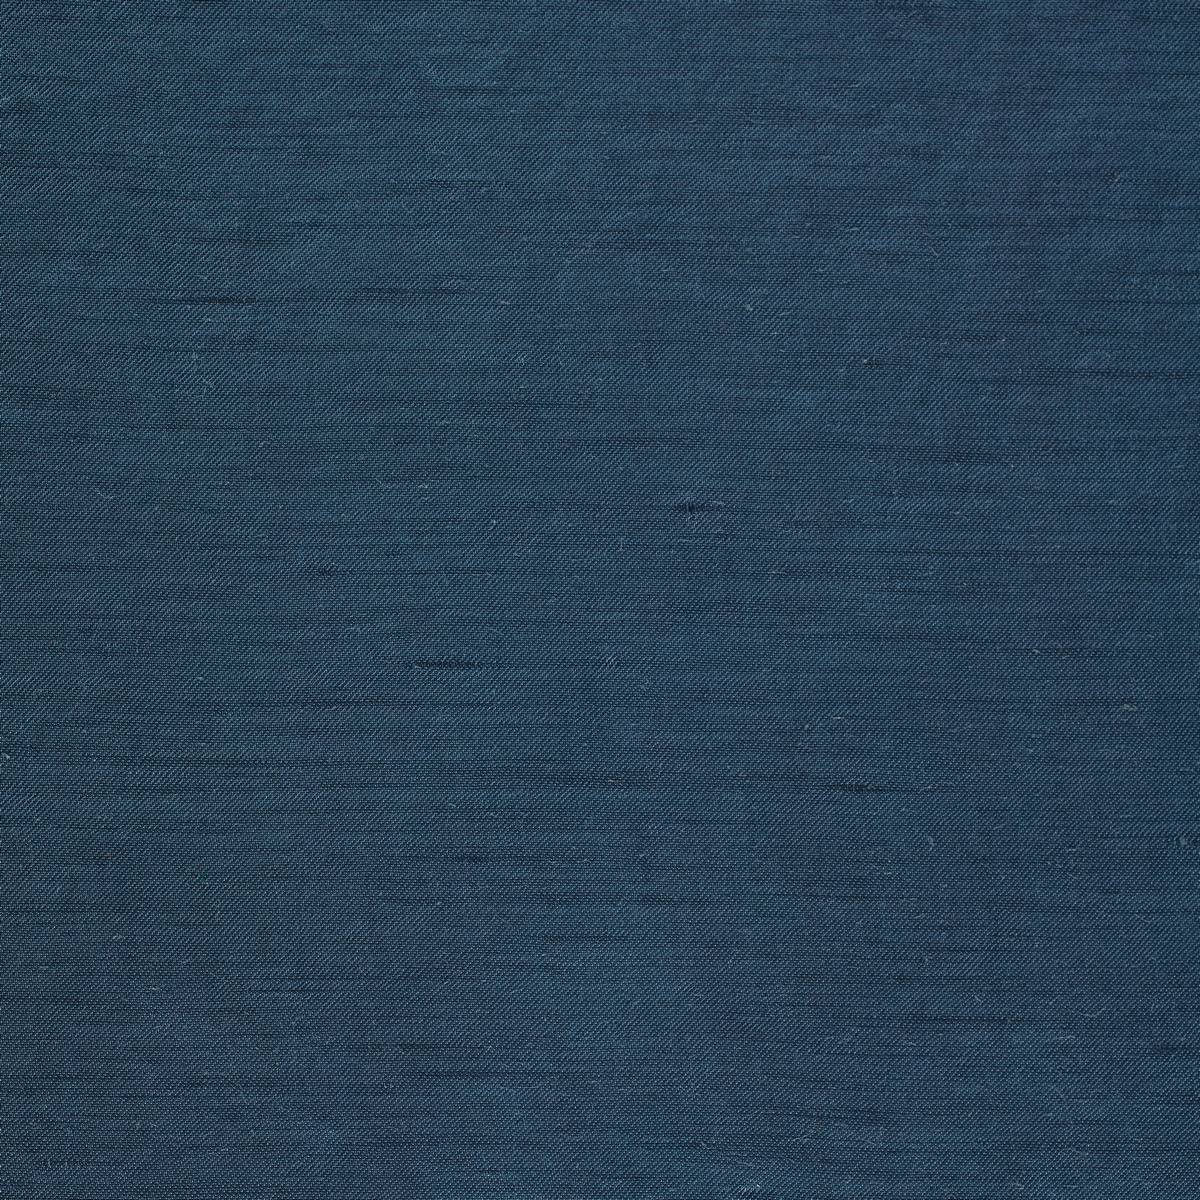 Amoret Bluestone Fabric by Zoffany